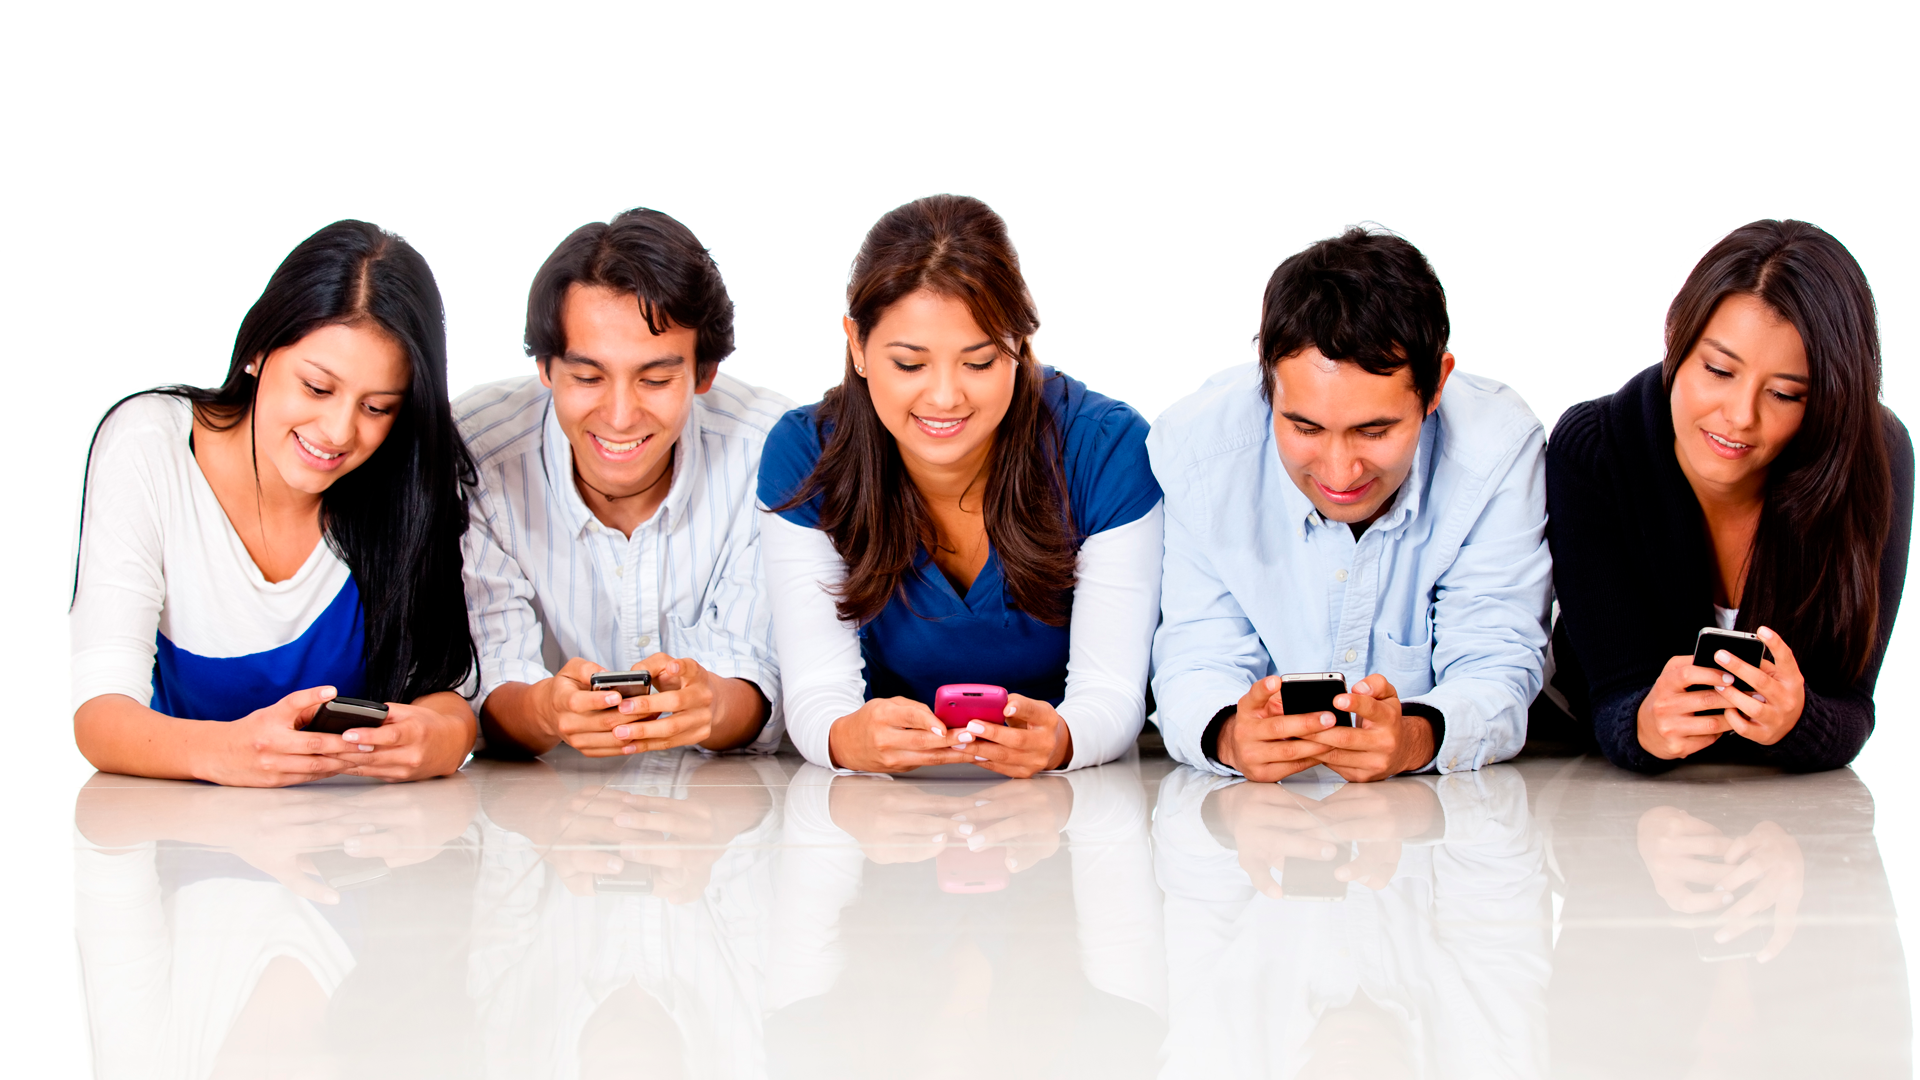 Personas jóvenes utlizando teléfonos celulares. IPC. Mayo 2023.